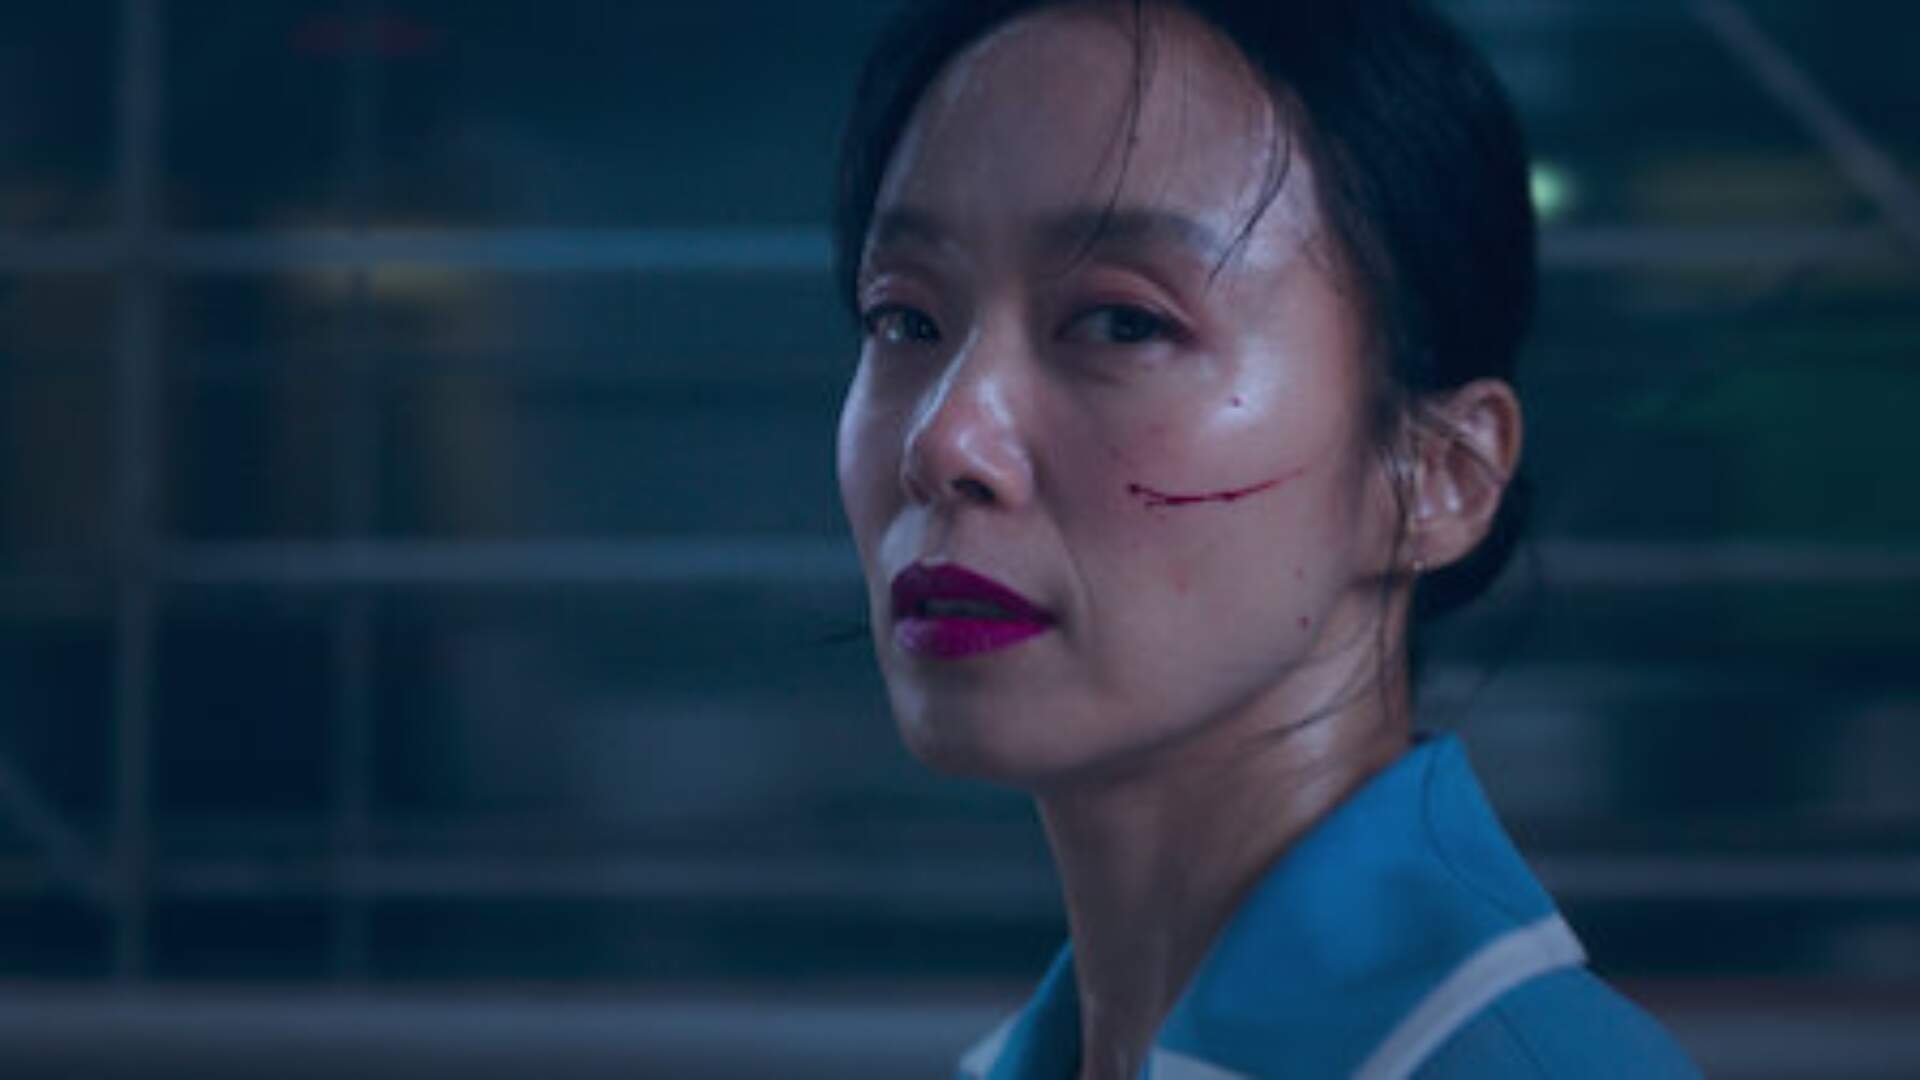 Kill Bok-soon: Netflix divulga trailer final de novo filme coreano protagonizado por Jeon Do-yeon - Metropolitana FM